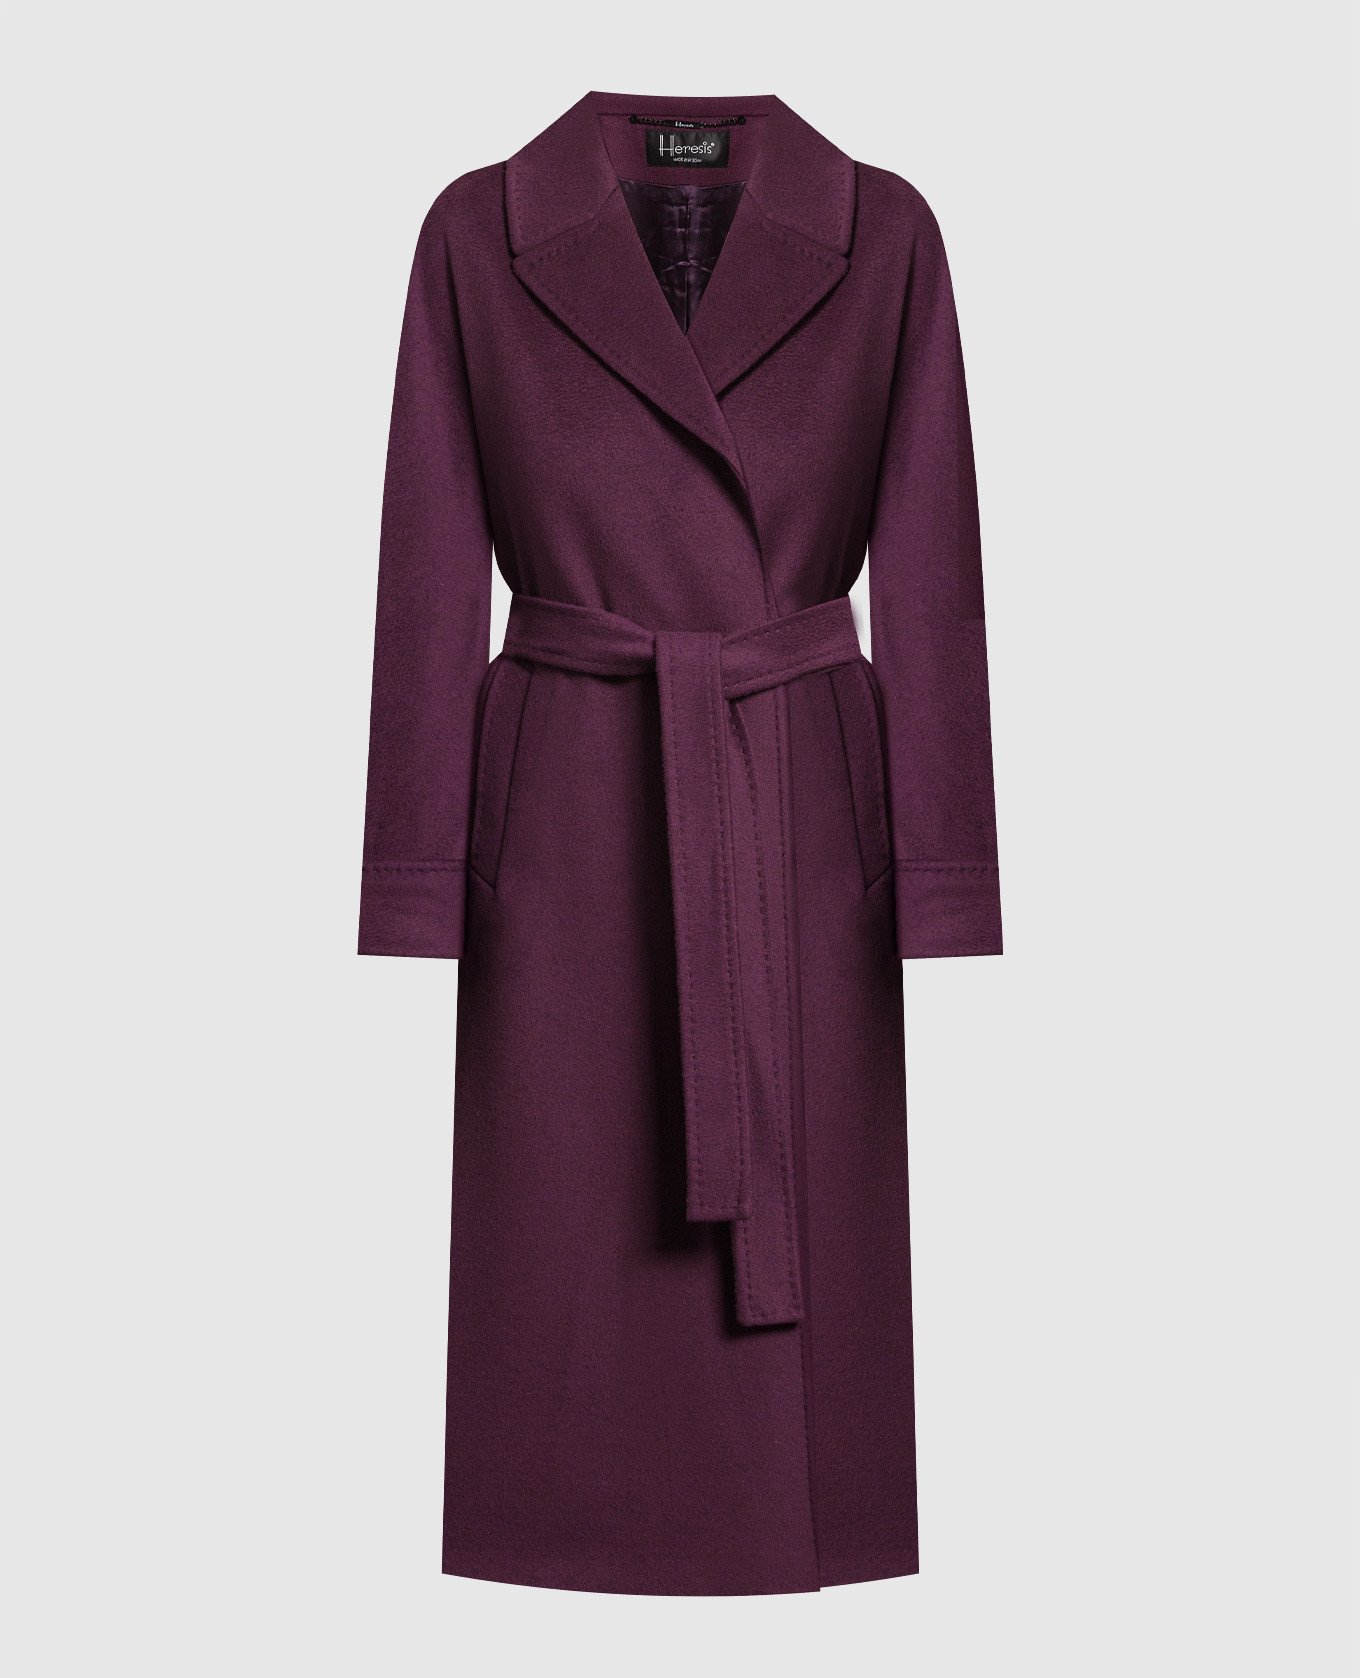 Purple coat made of wool